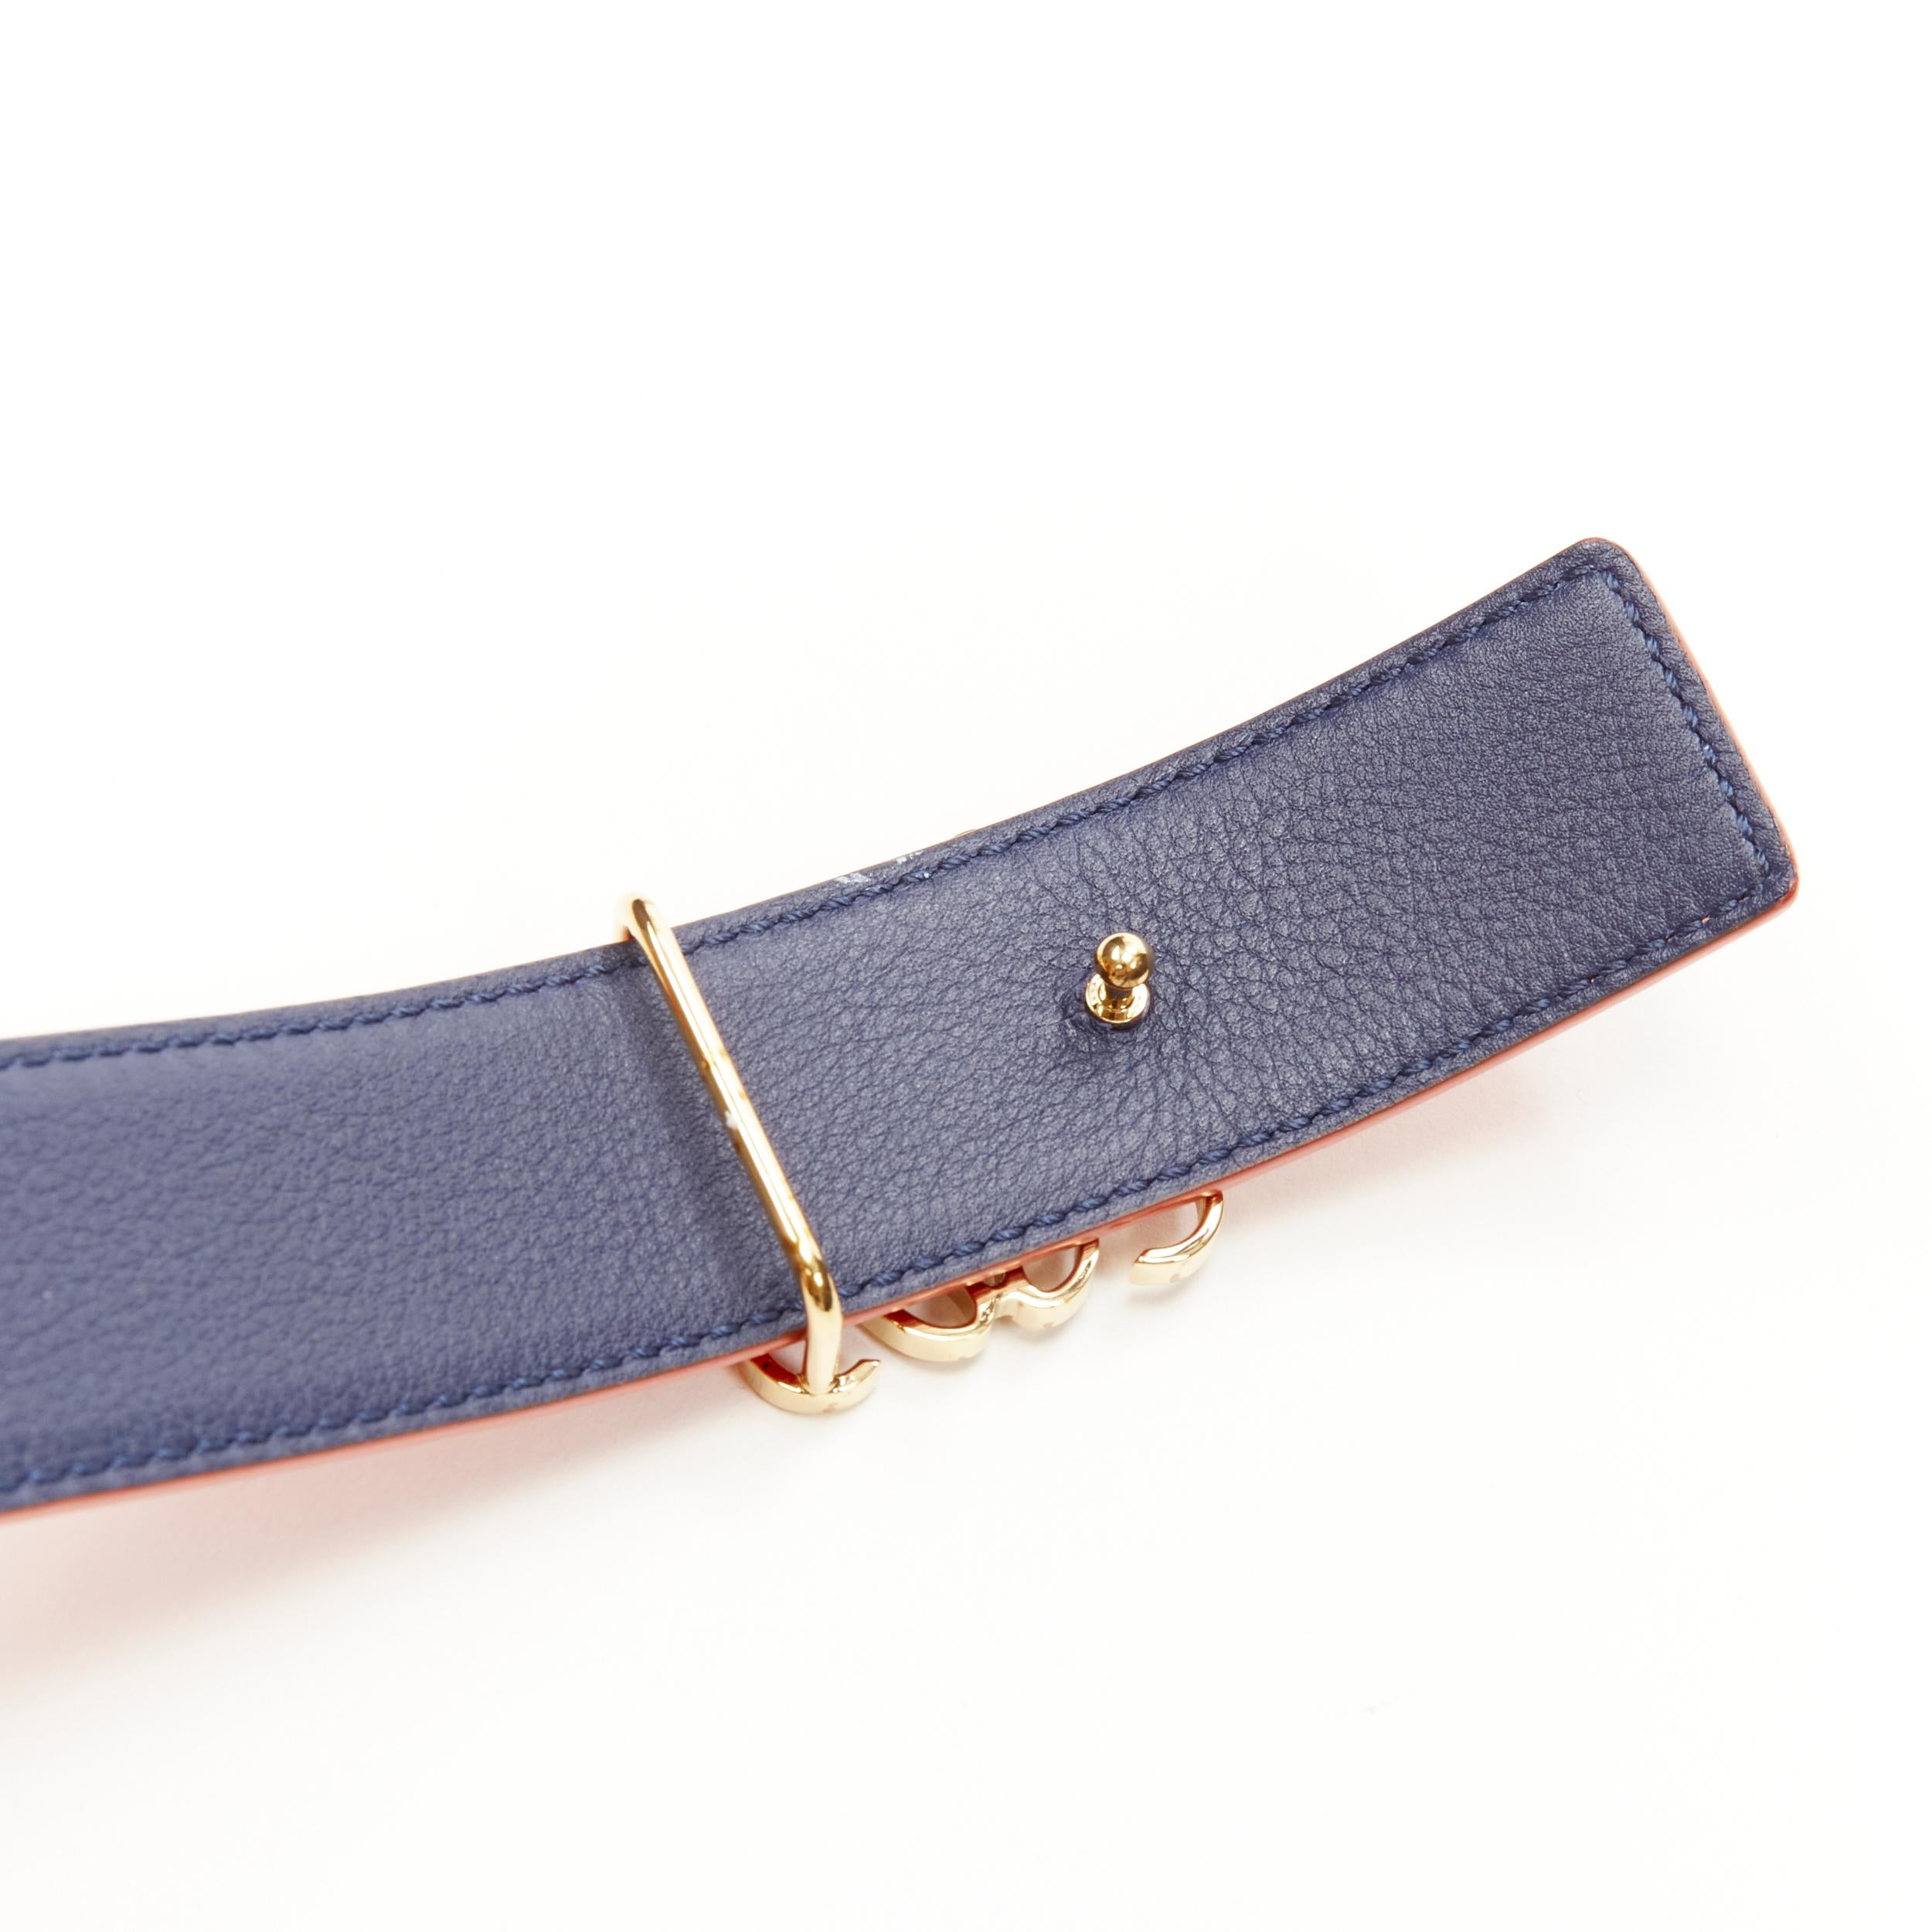 Orange LOEWE gold Anagram logo buckle reversible orange navy blue leather belt 75cm 30